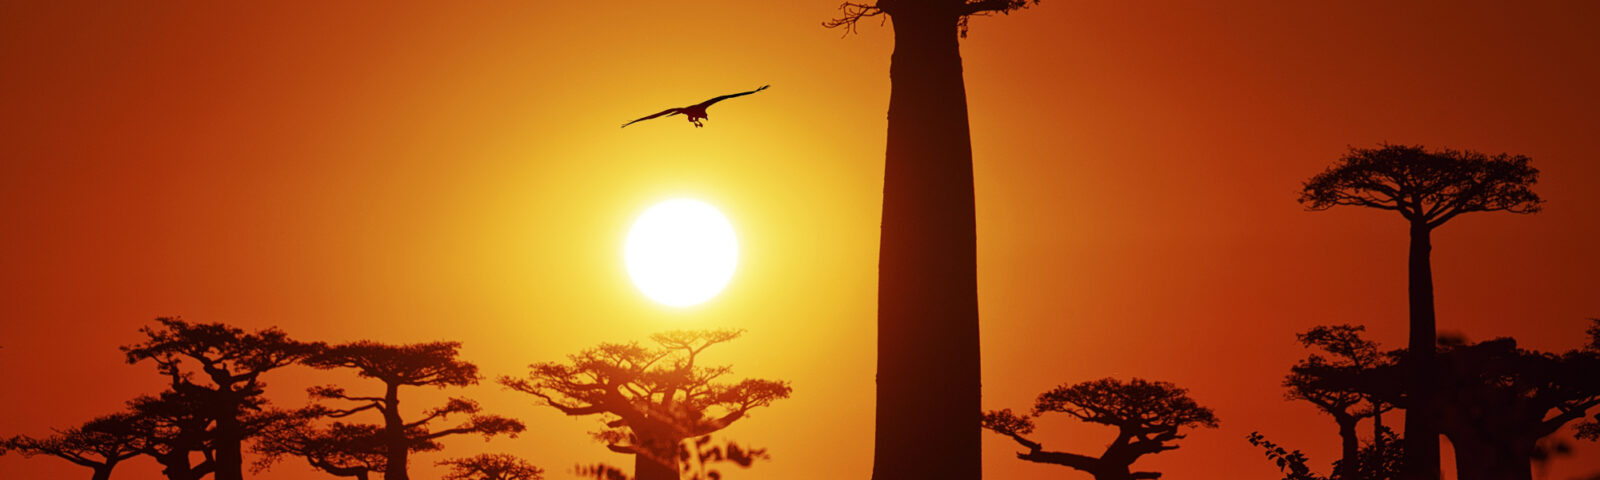 Solnedgang over baobab-trær på Madagascar